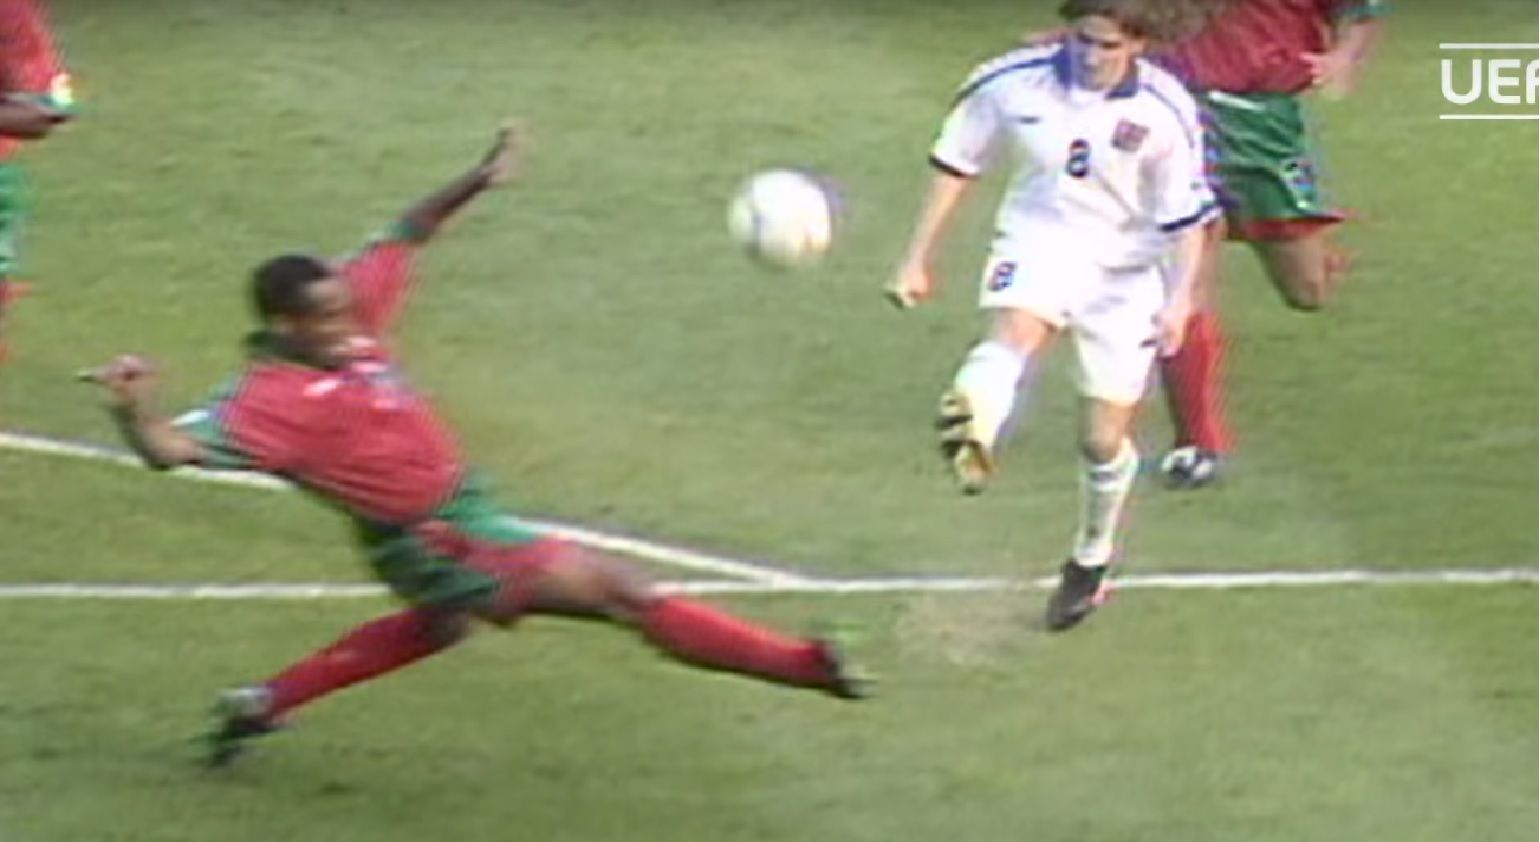 fotbal, ME 1996, čtvrtfinále, Česko - Portugalsko, Karel Poborský, Helder Cristóvao